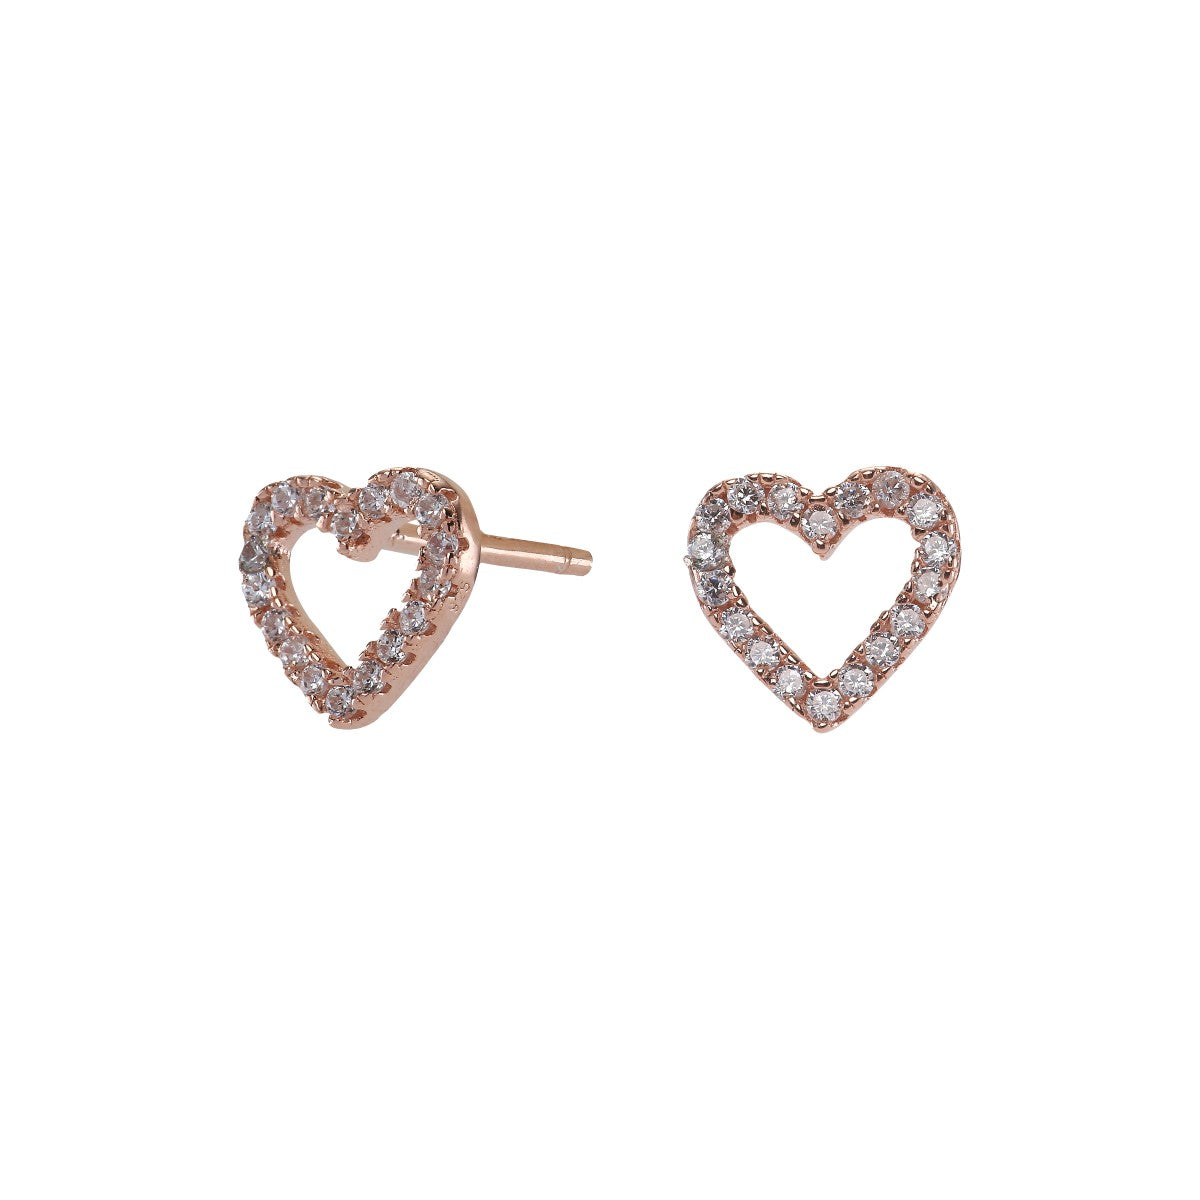 Rosegold-plated silver earrings AIDA heart cz. 6mm